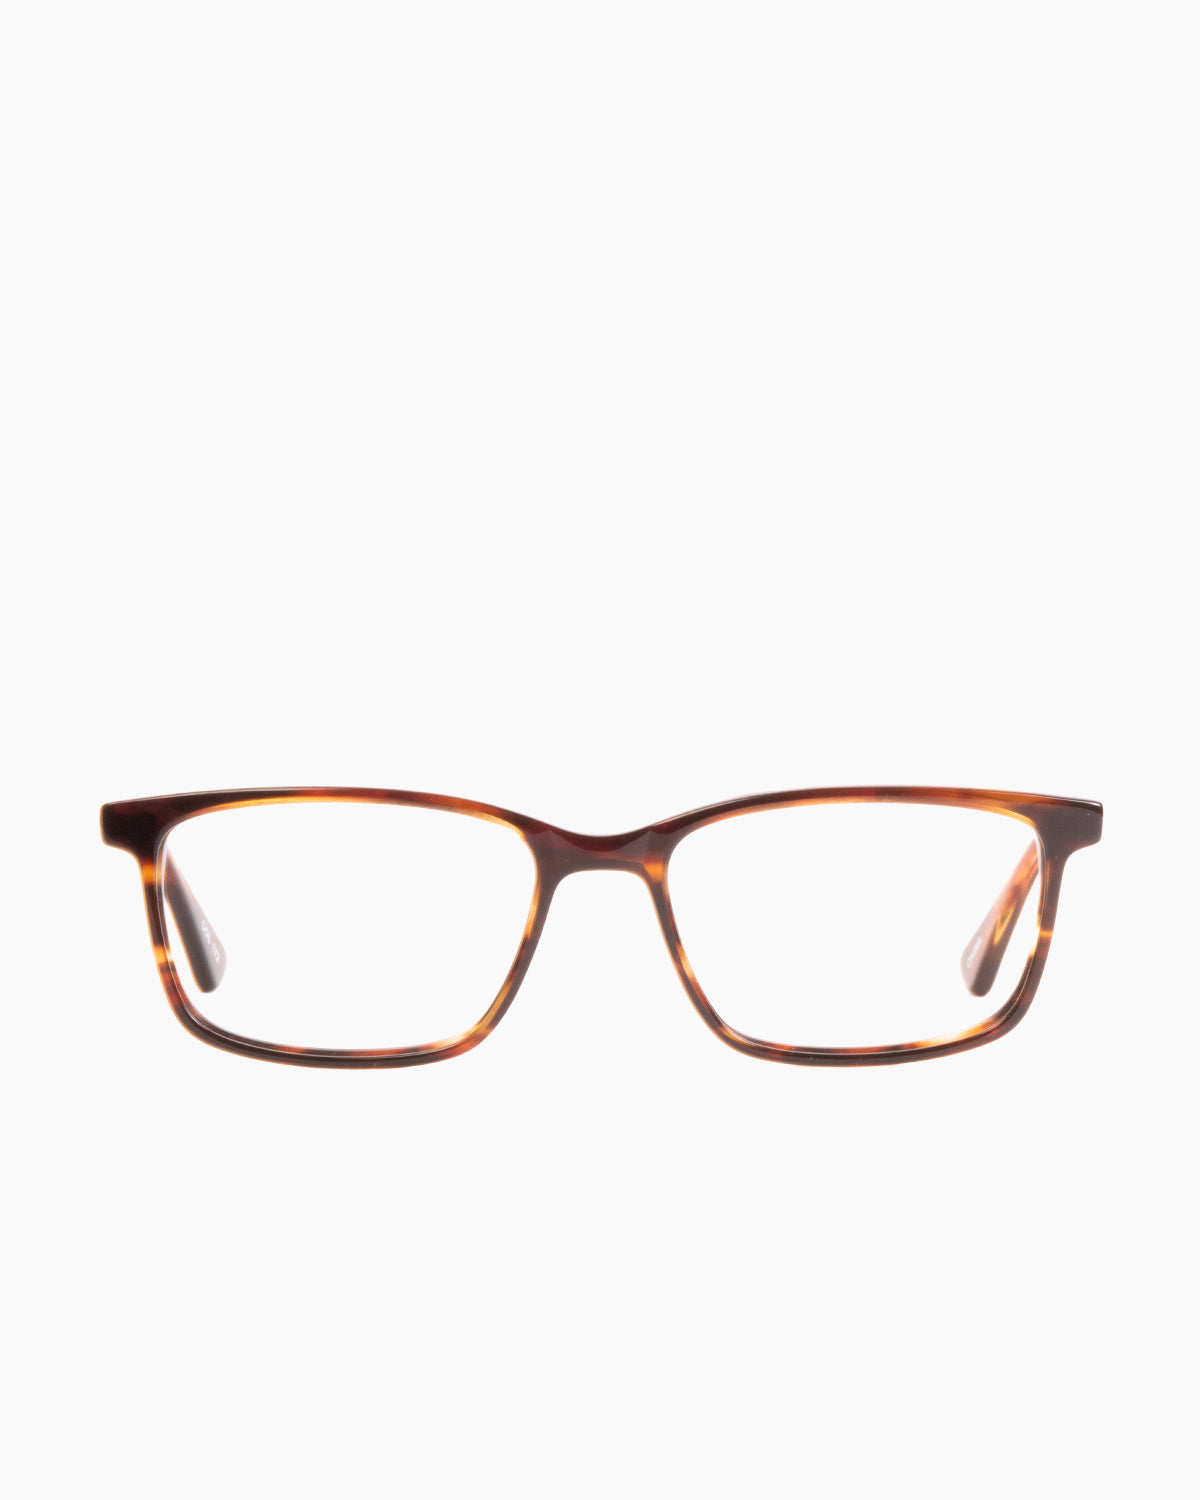 Evolve - Carter - 172 | Bar à lunettes